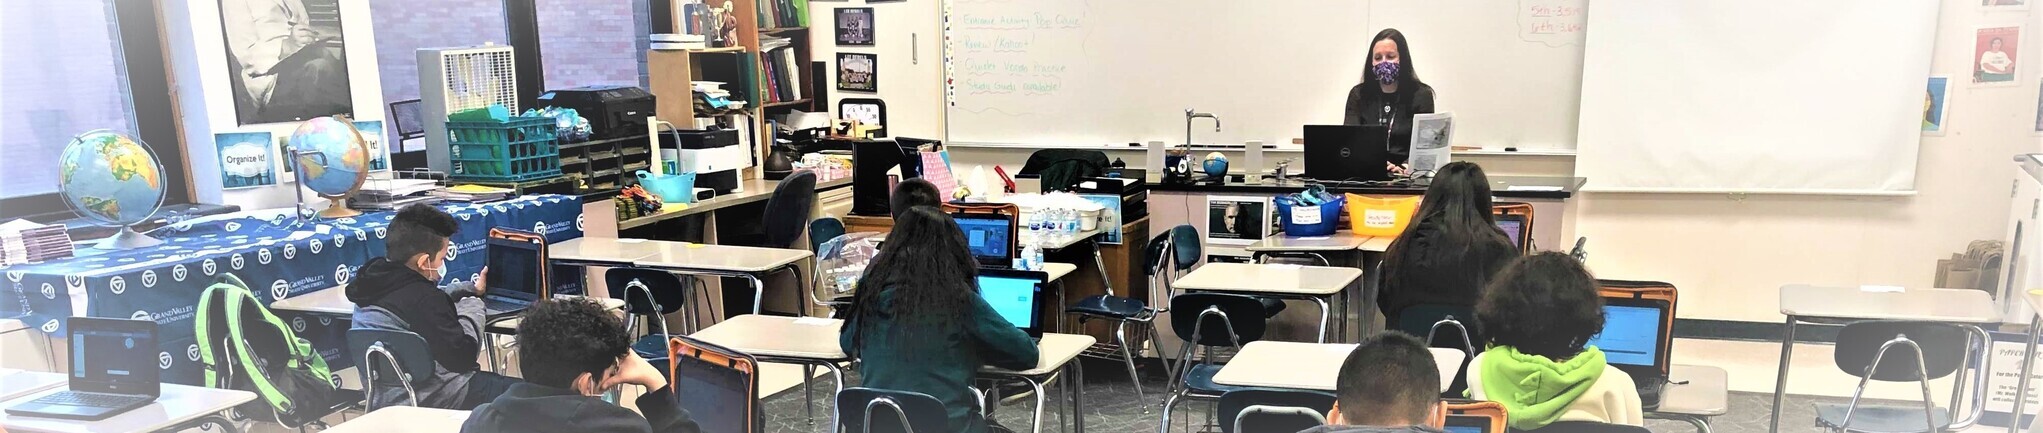 Students on Chromebooks